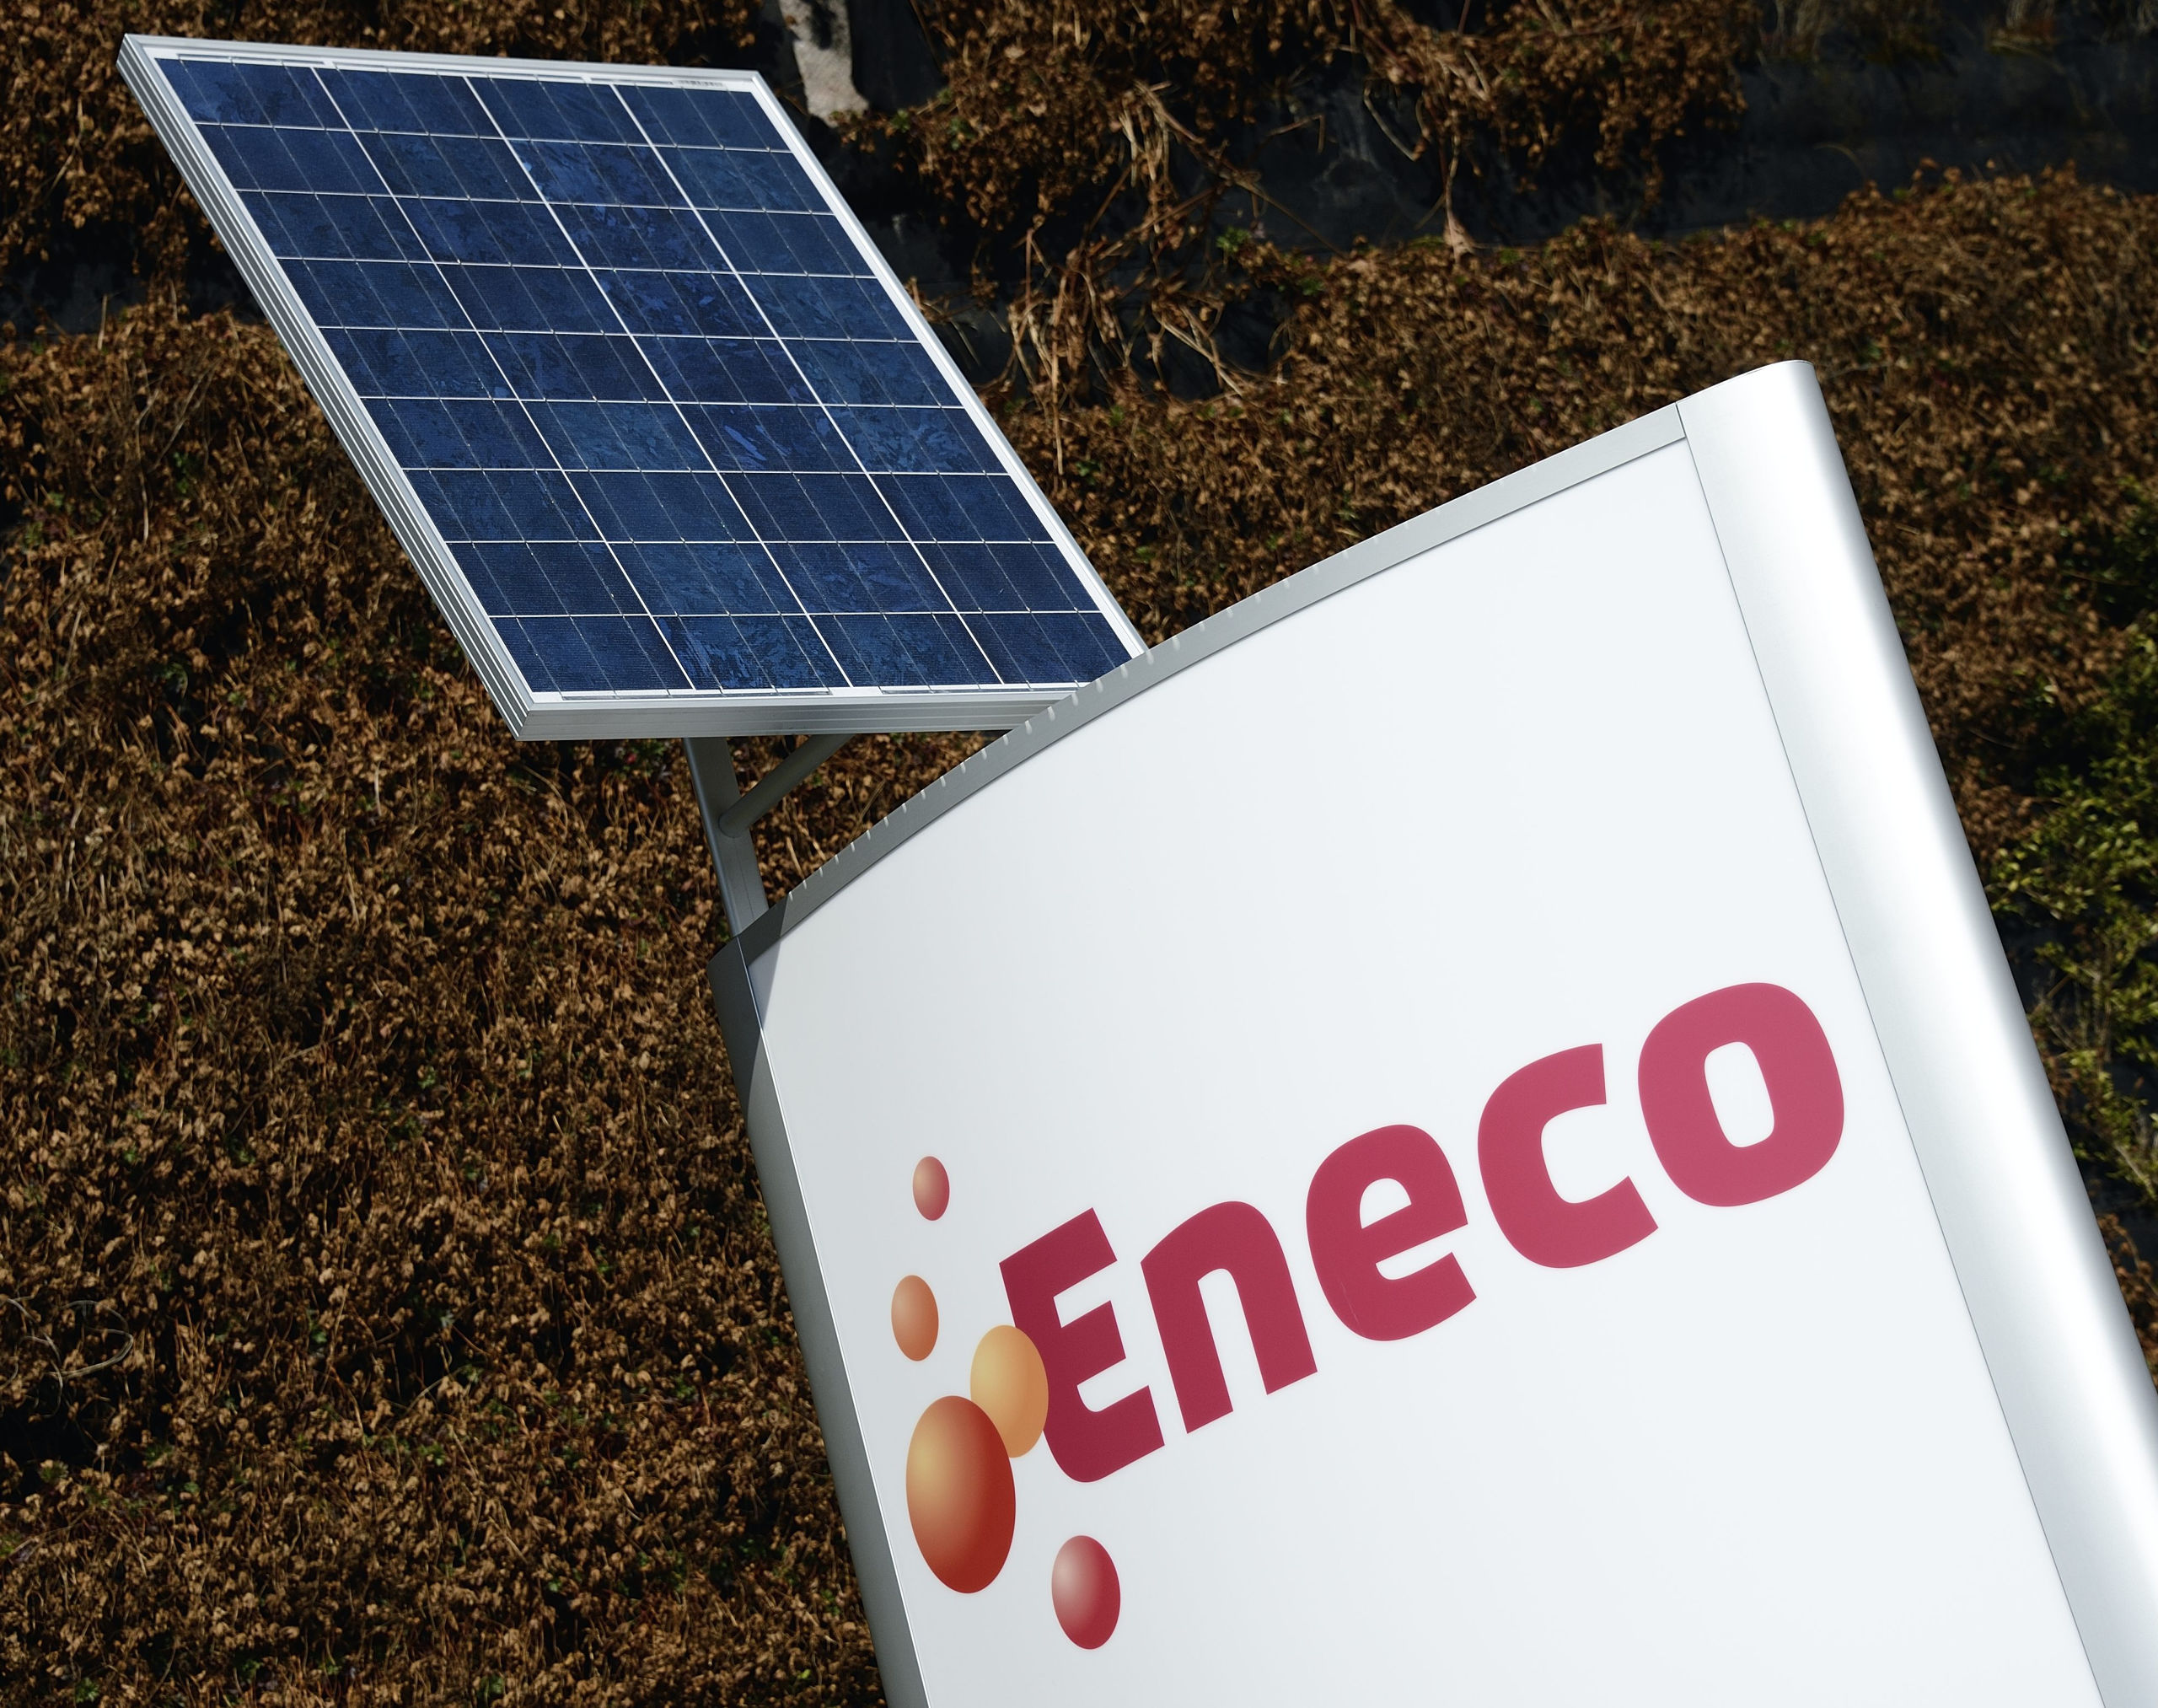 2013-03-25 15:13:42 ROTTERDAM - Het logo van energieleverancier Eneco. ANP XTRA LEX VAN LIESHOUT